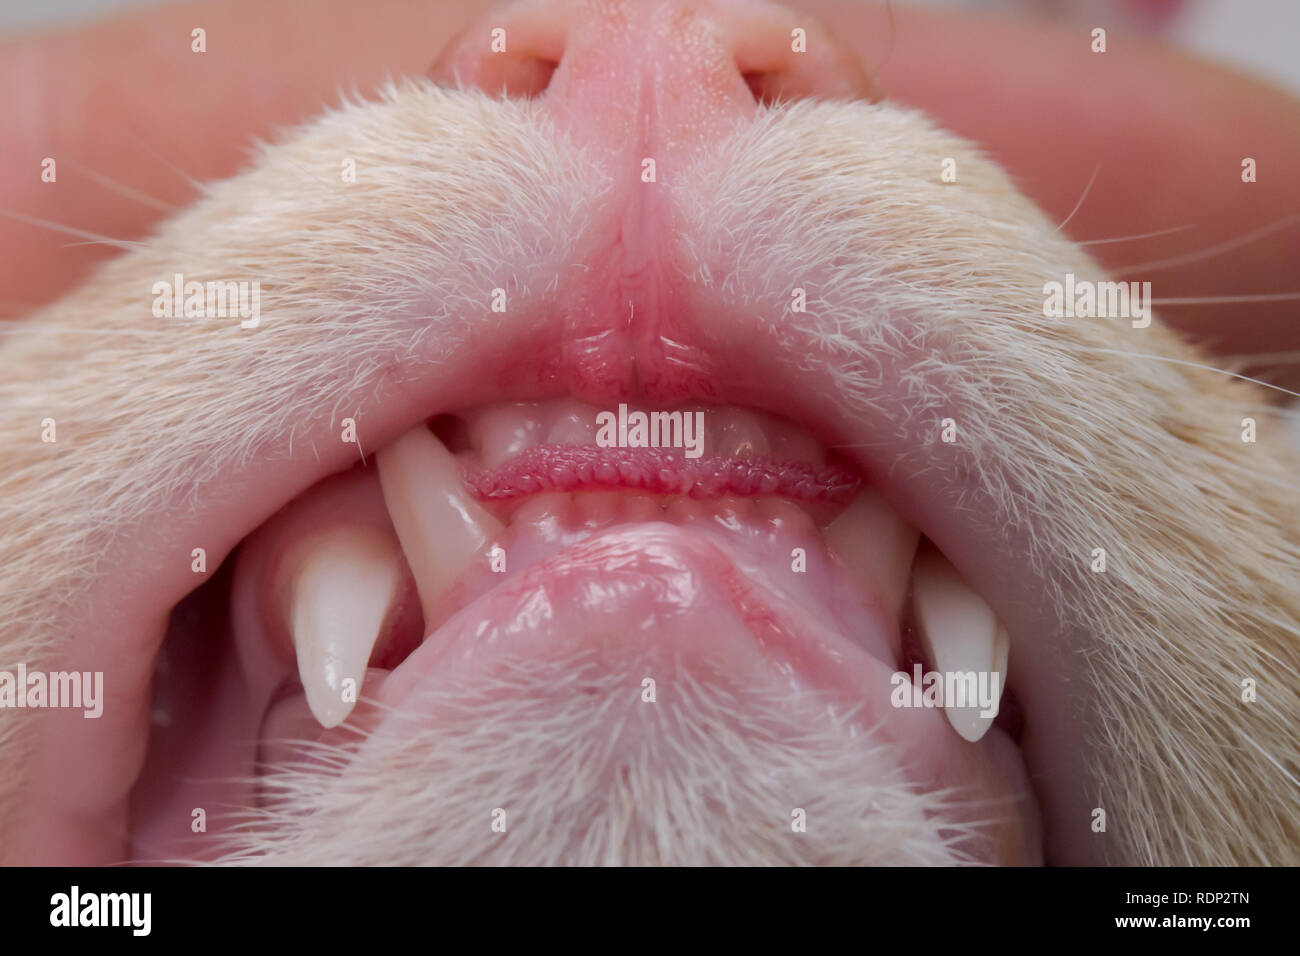 Dentición felinos, caninos e incisivos Foto de stock